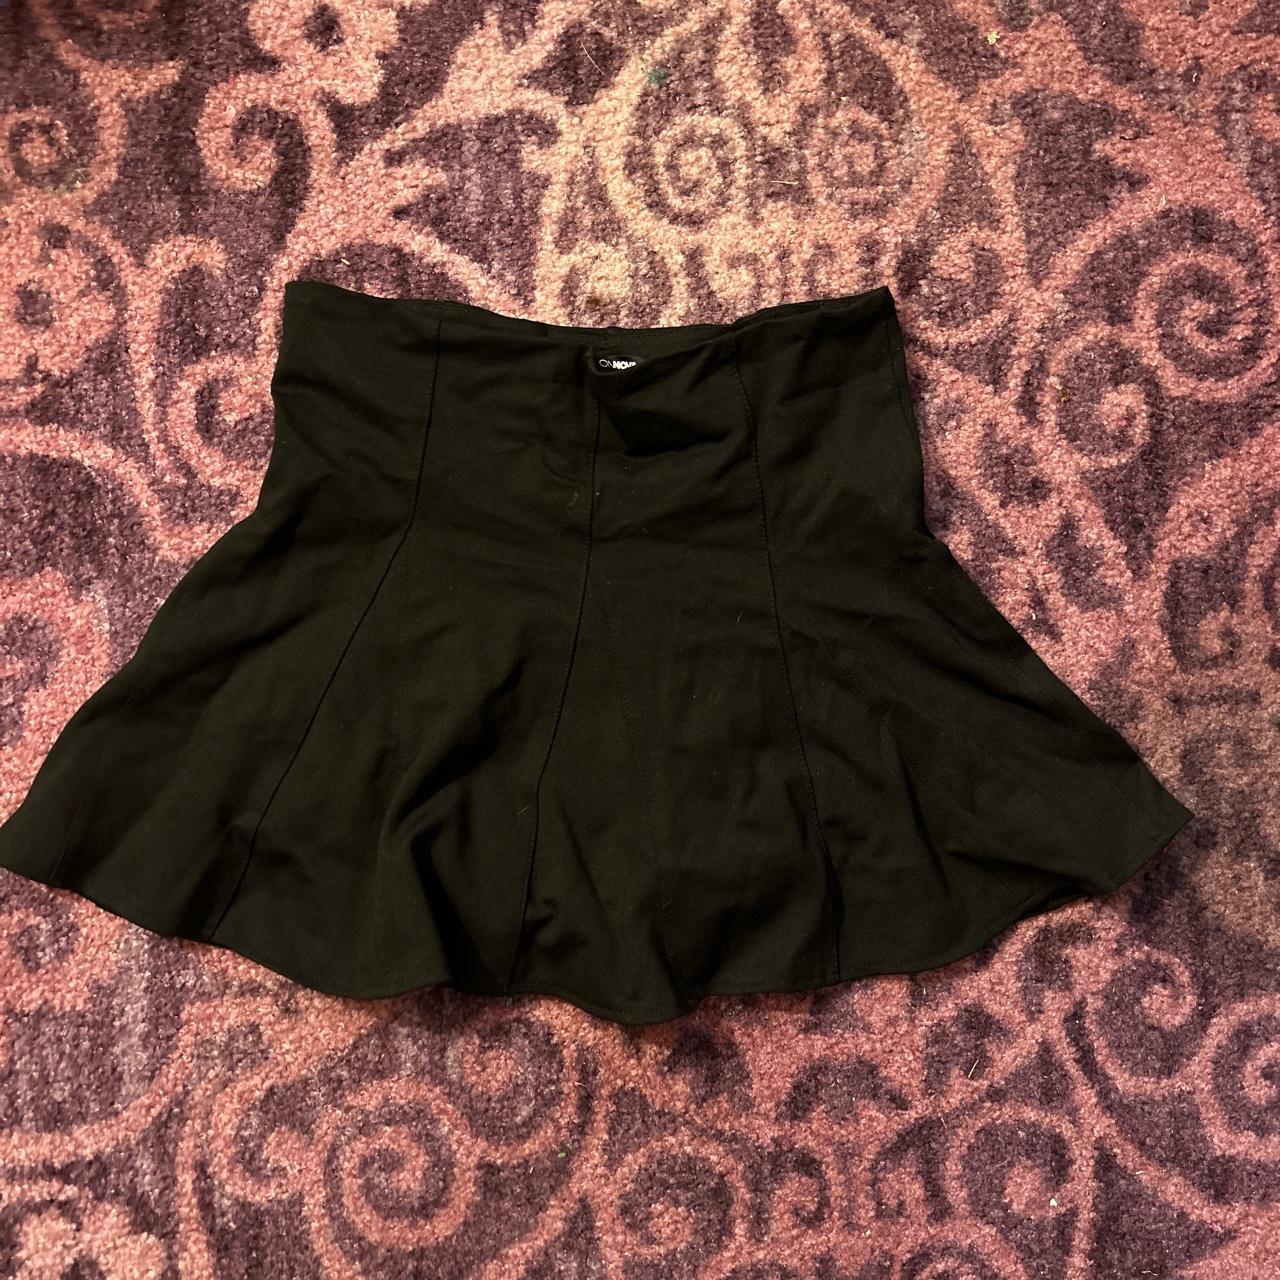 fashion nova skirt -cute pleated skirt - size... - Depop